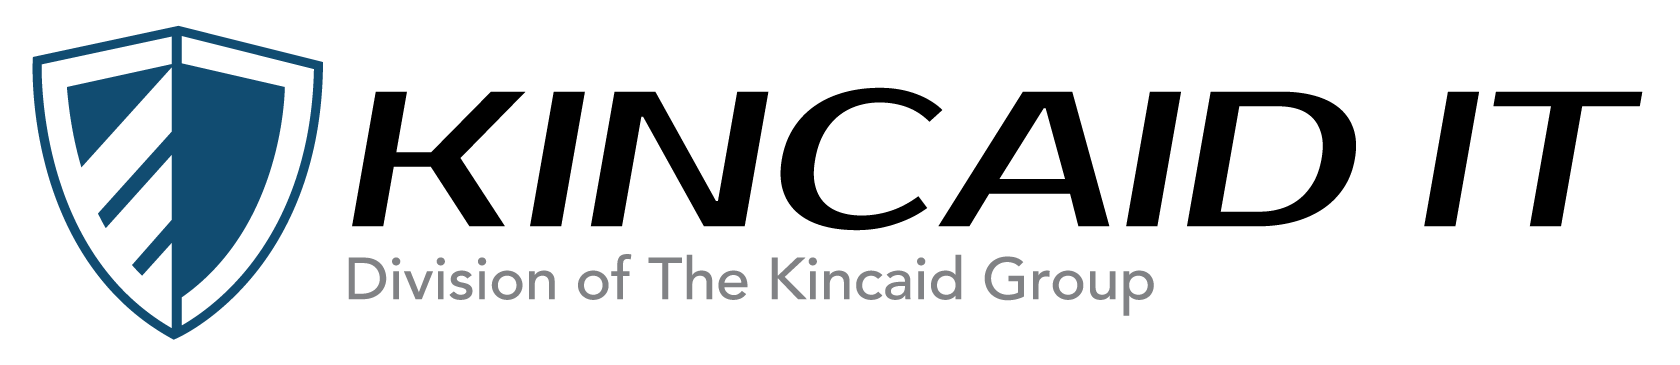 Copy of KIT full logo color-01